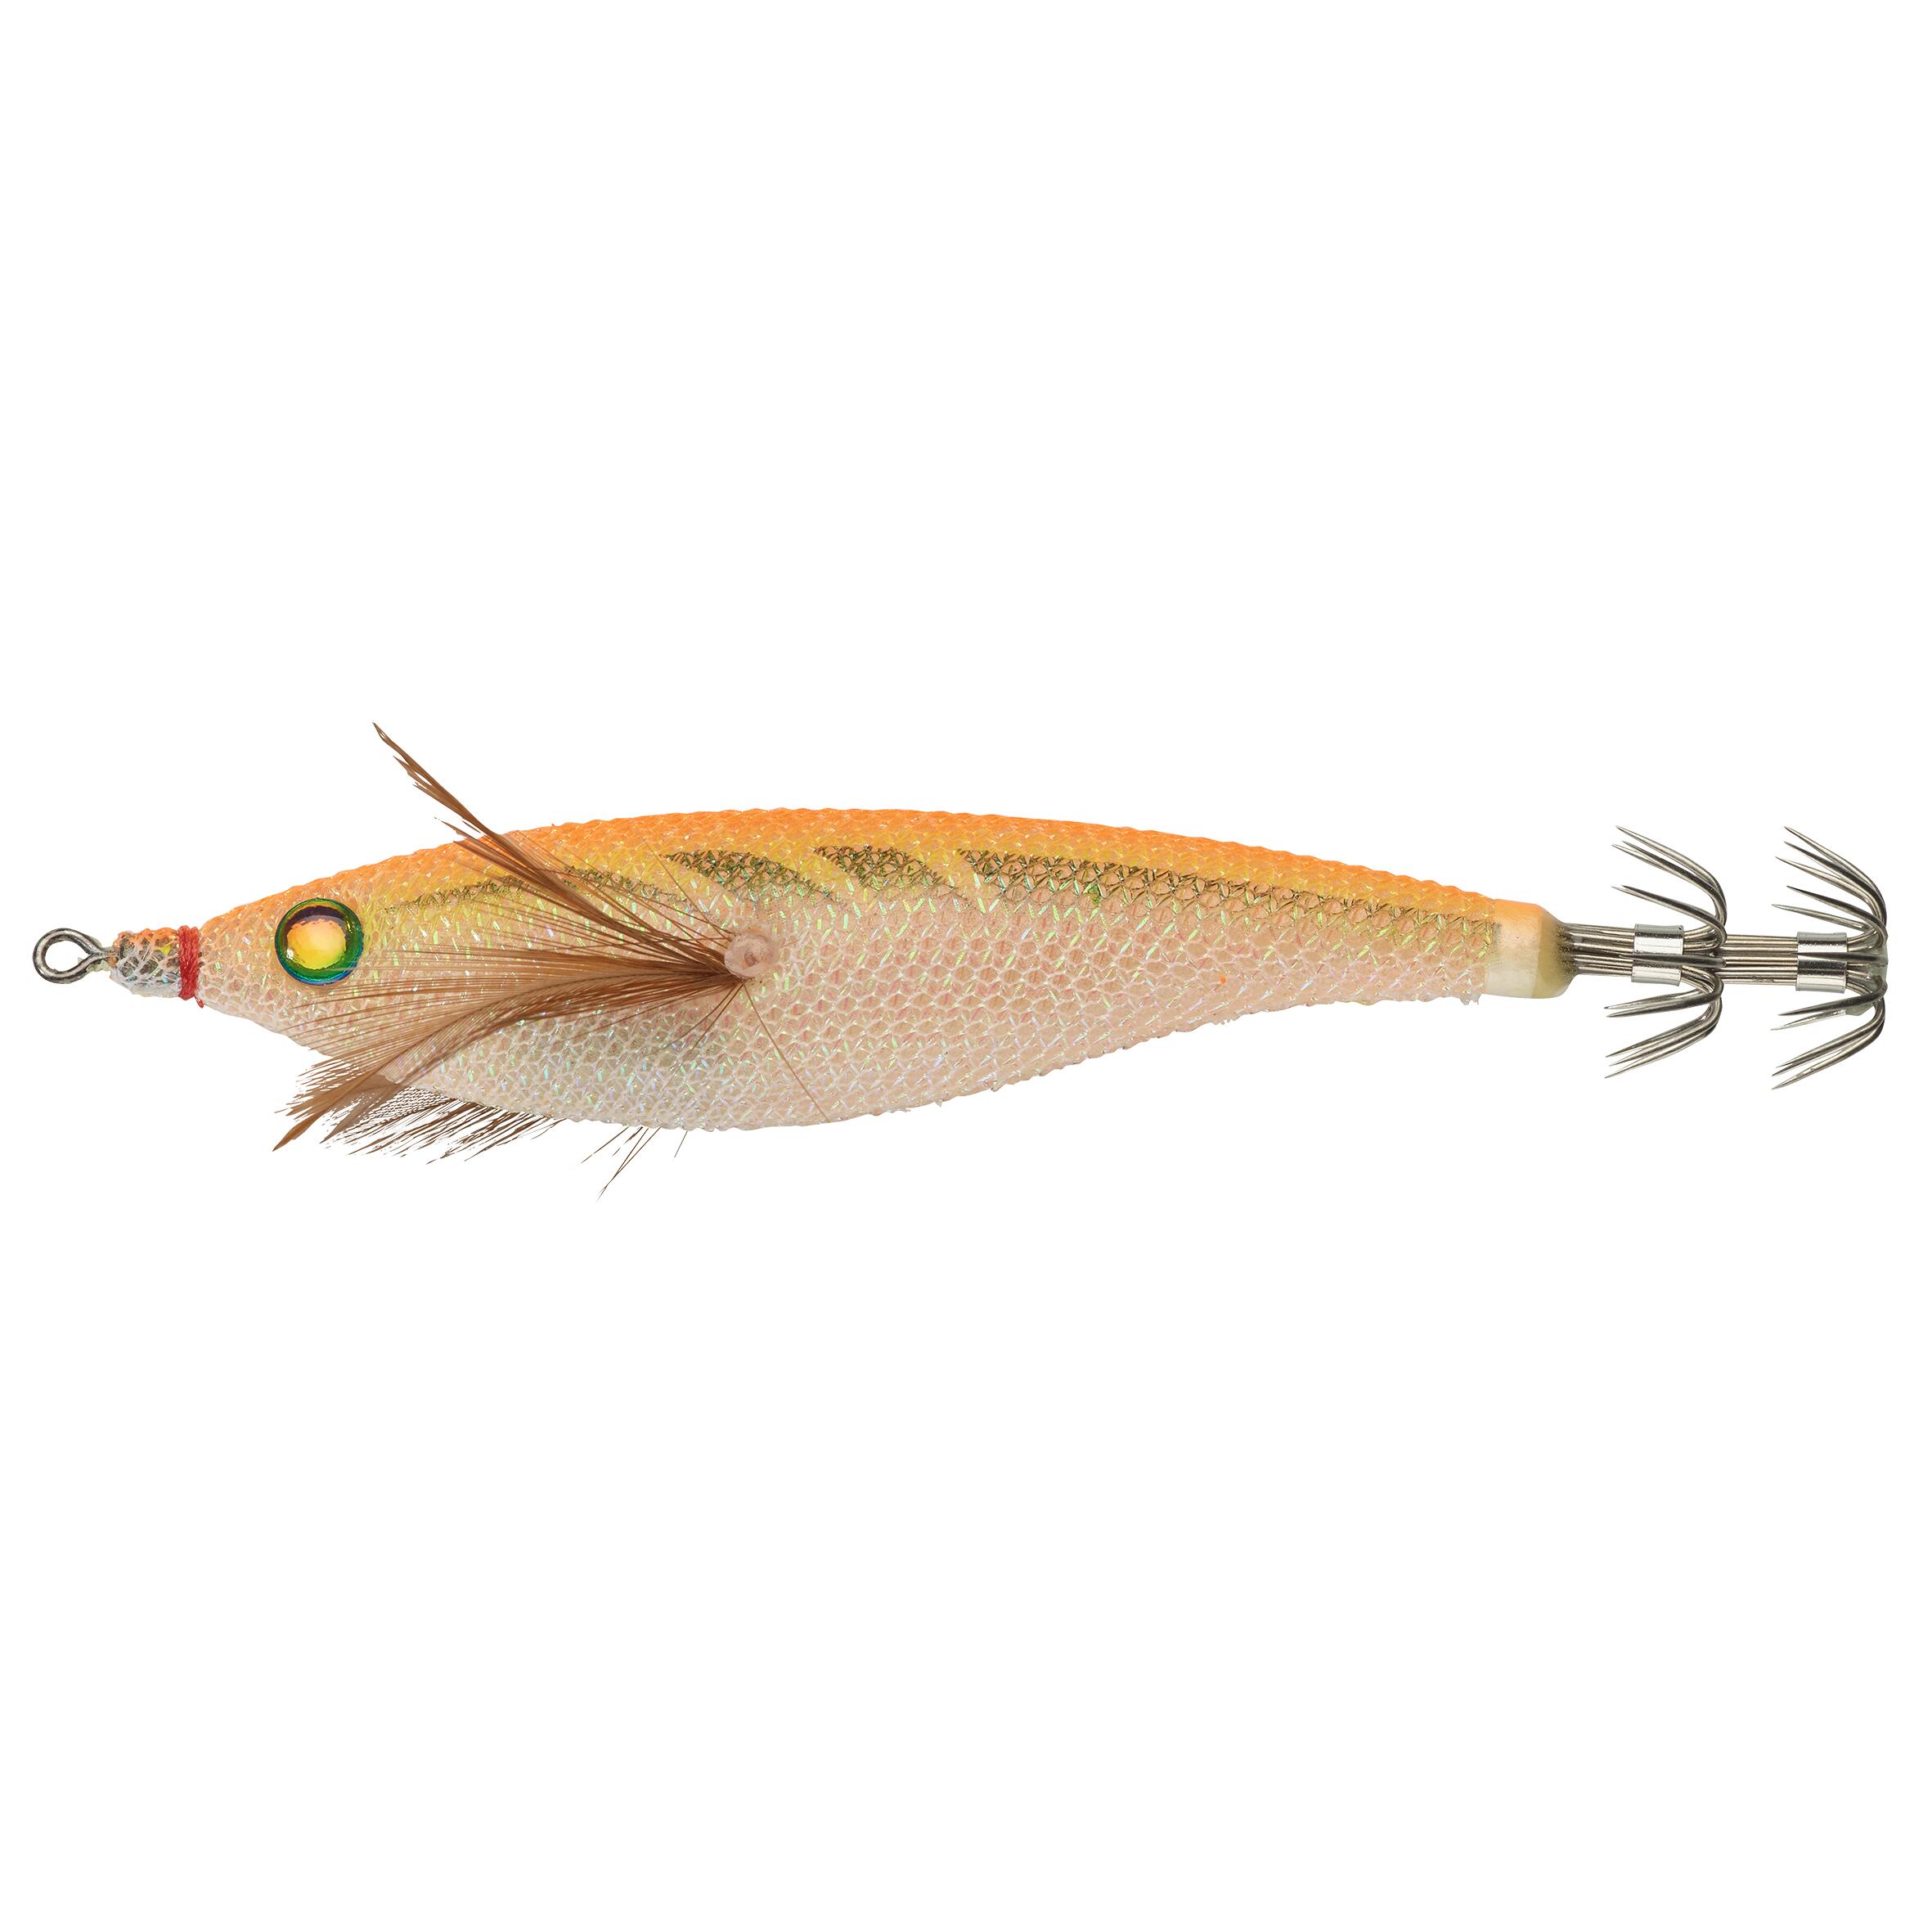 Floating jig for cuttlefish/squid fishing EBIFLO 2.5/110 - Neon orange 1/4